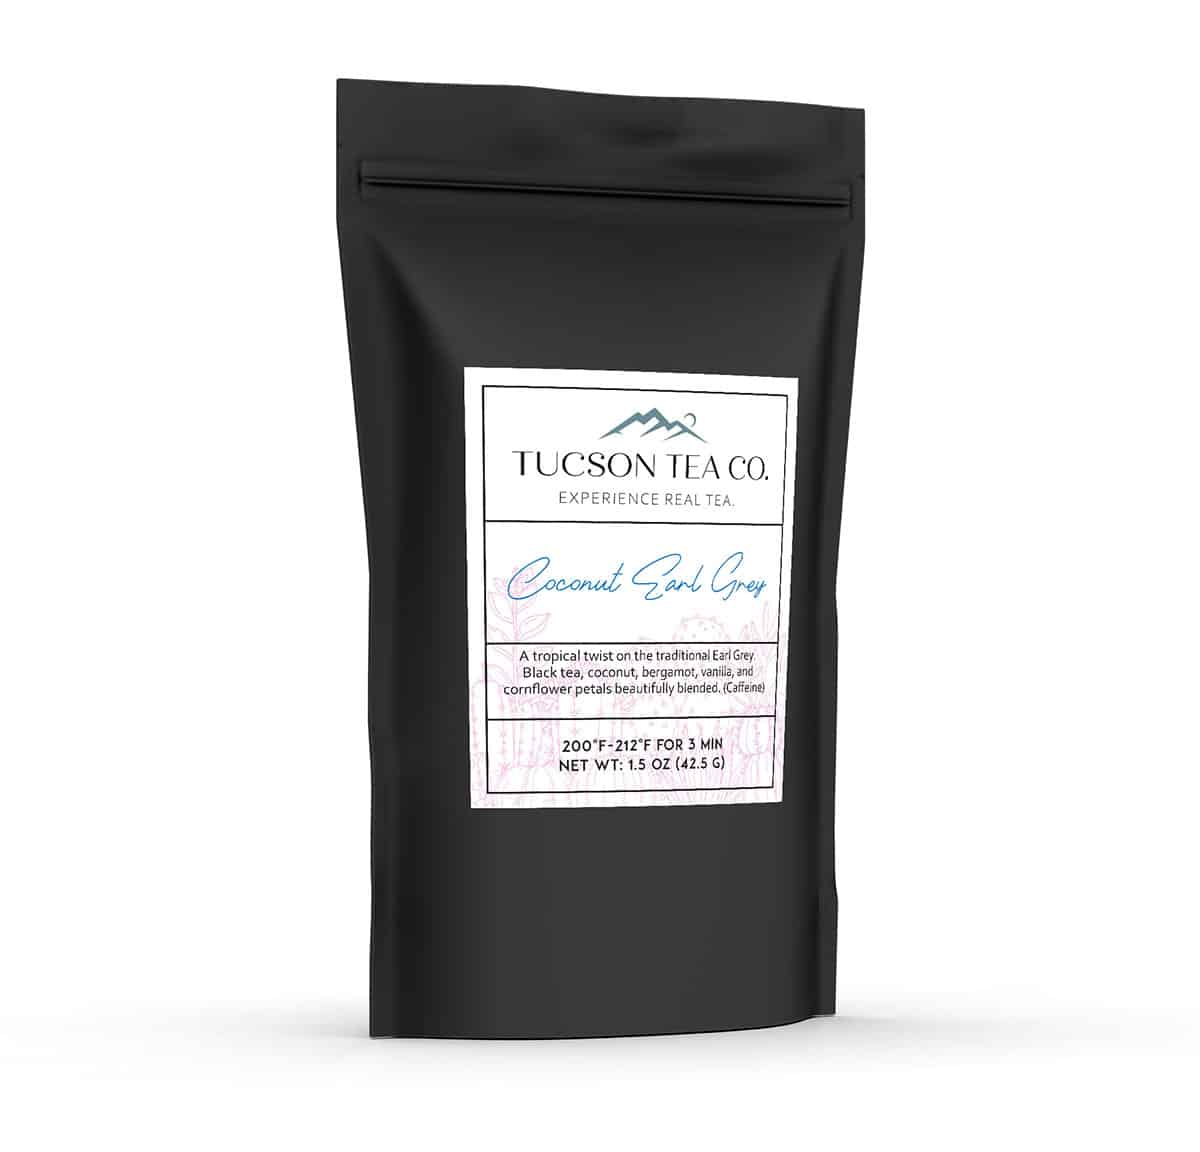 Tucson Tea's Coconut Earl Grey product bag